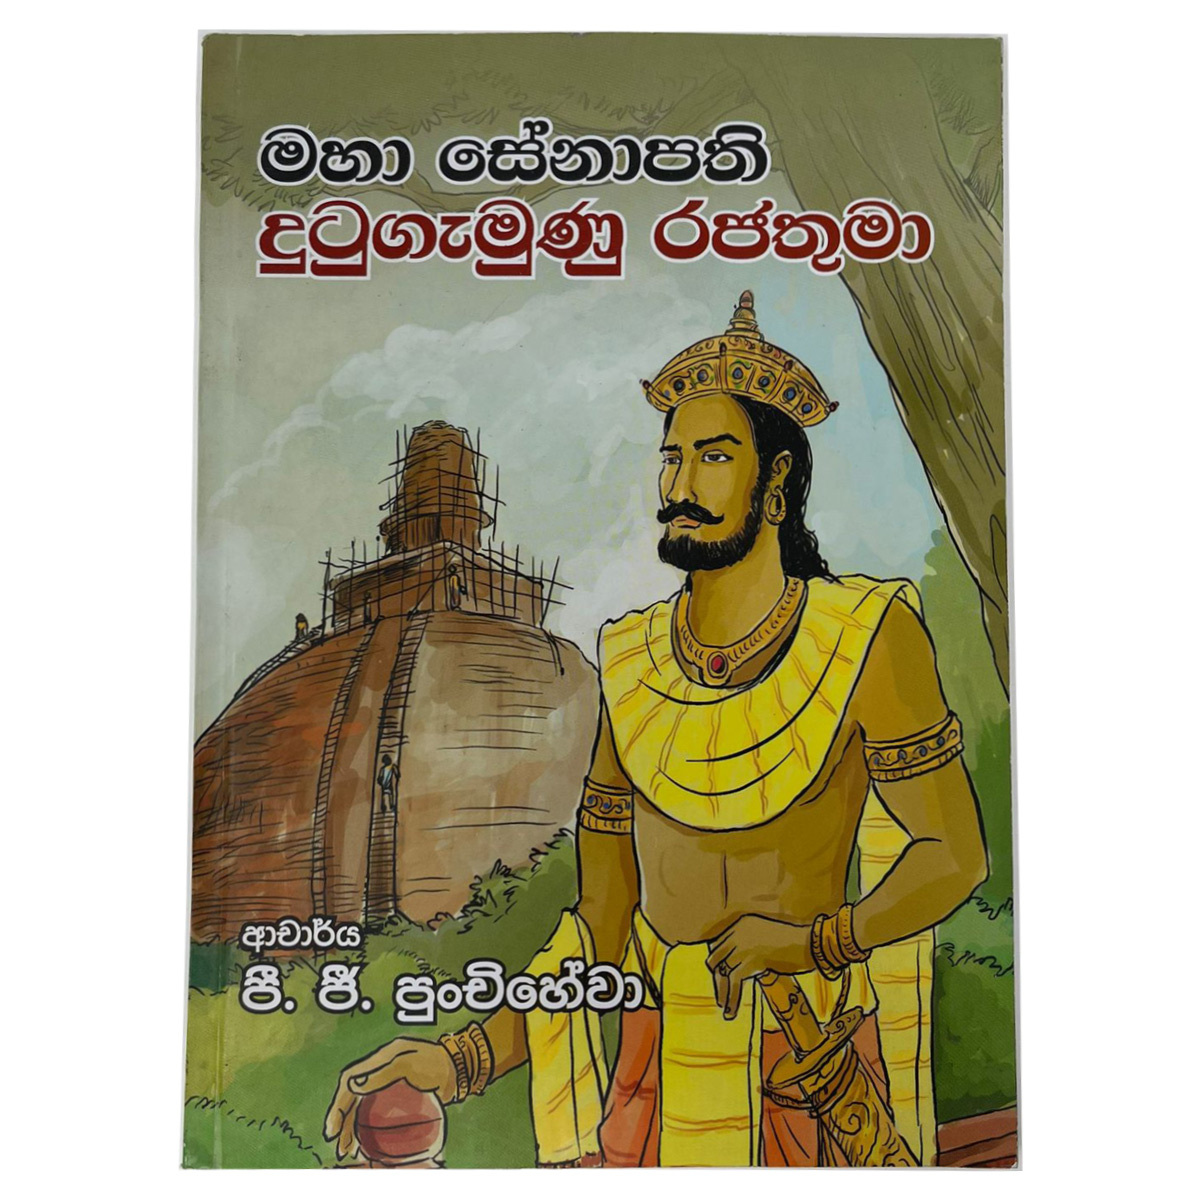 mahaa Senaapathi Dutugemun Rajathuma - දුටුගැමුණු රජතුමා